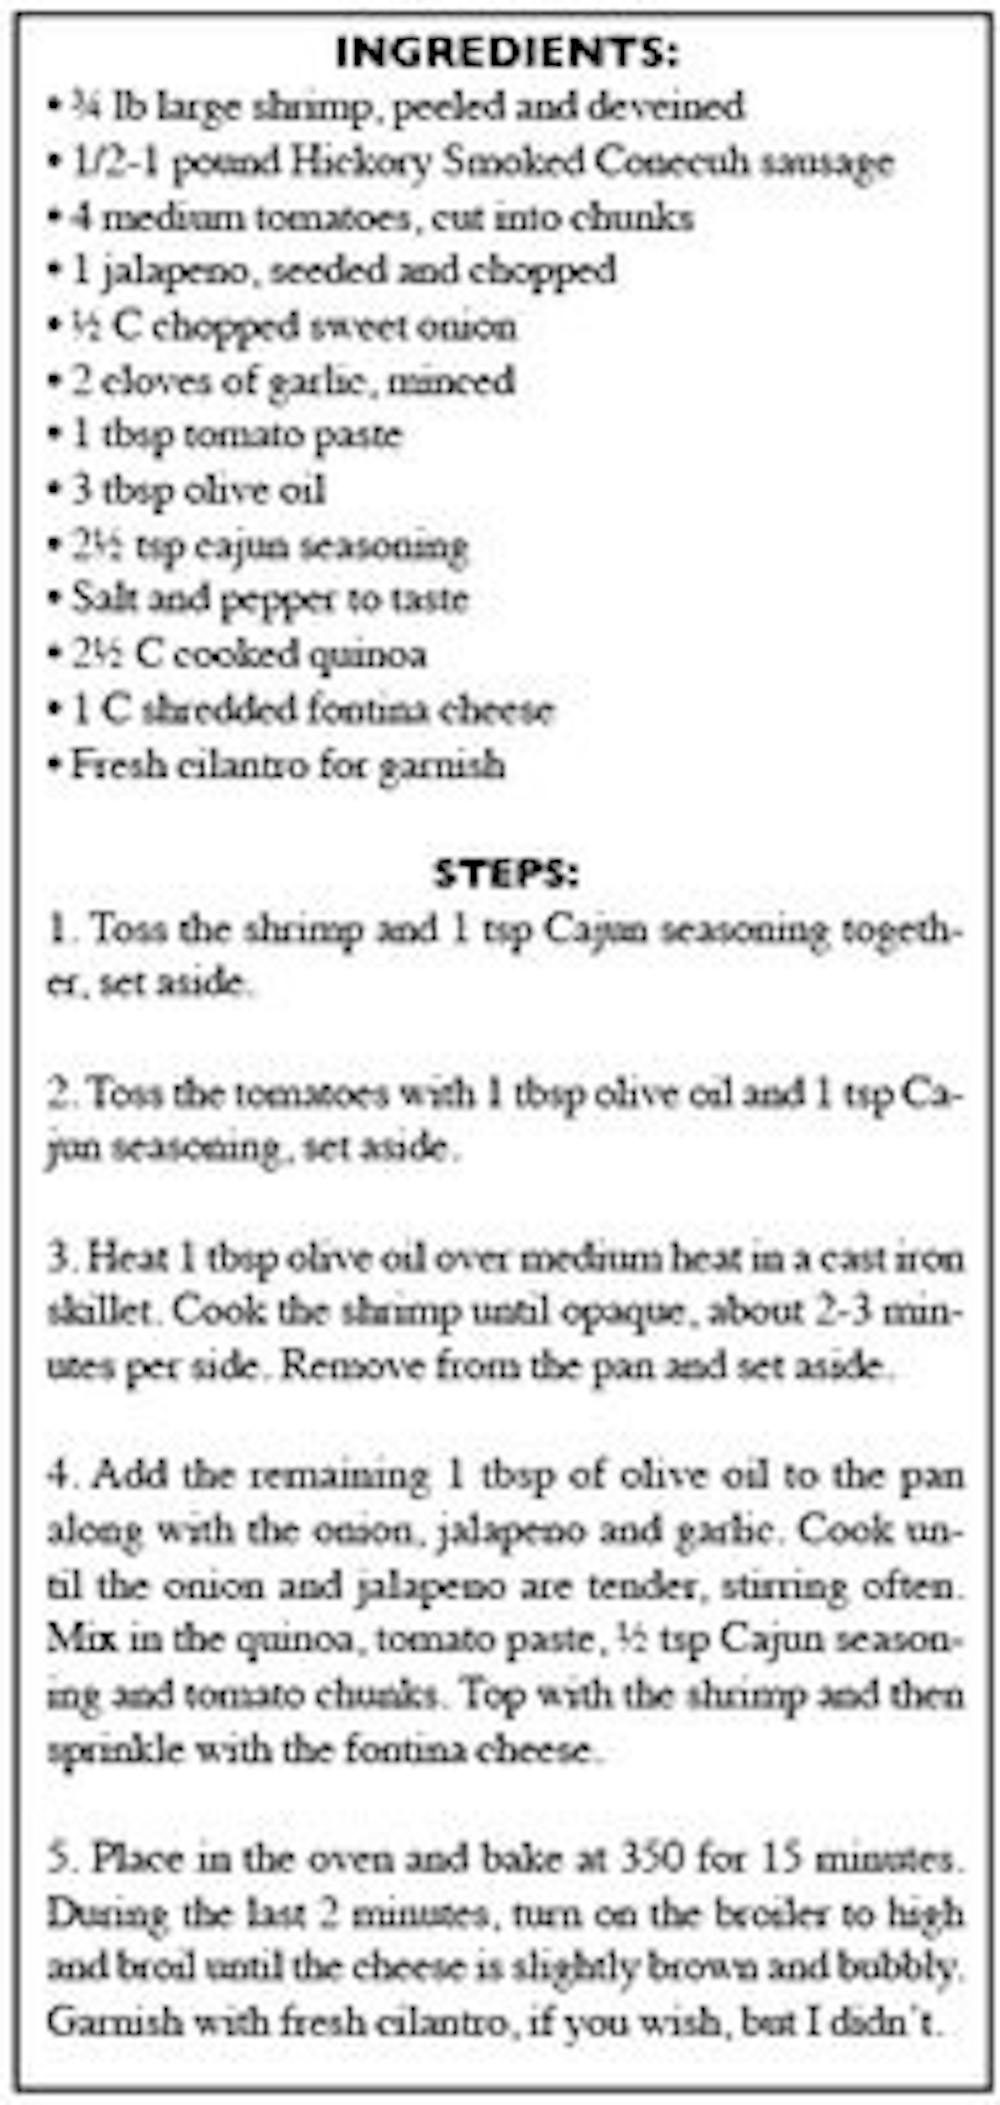 Recipe and directions for Conecuh sausage, shrimp and quinoa casserole